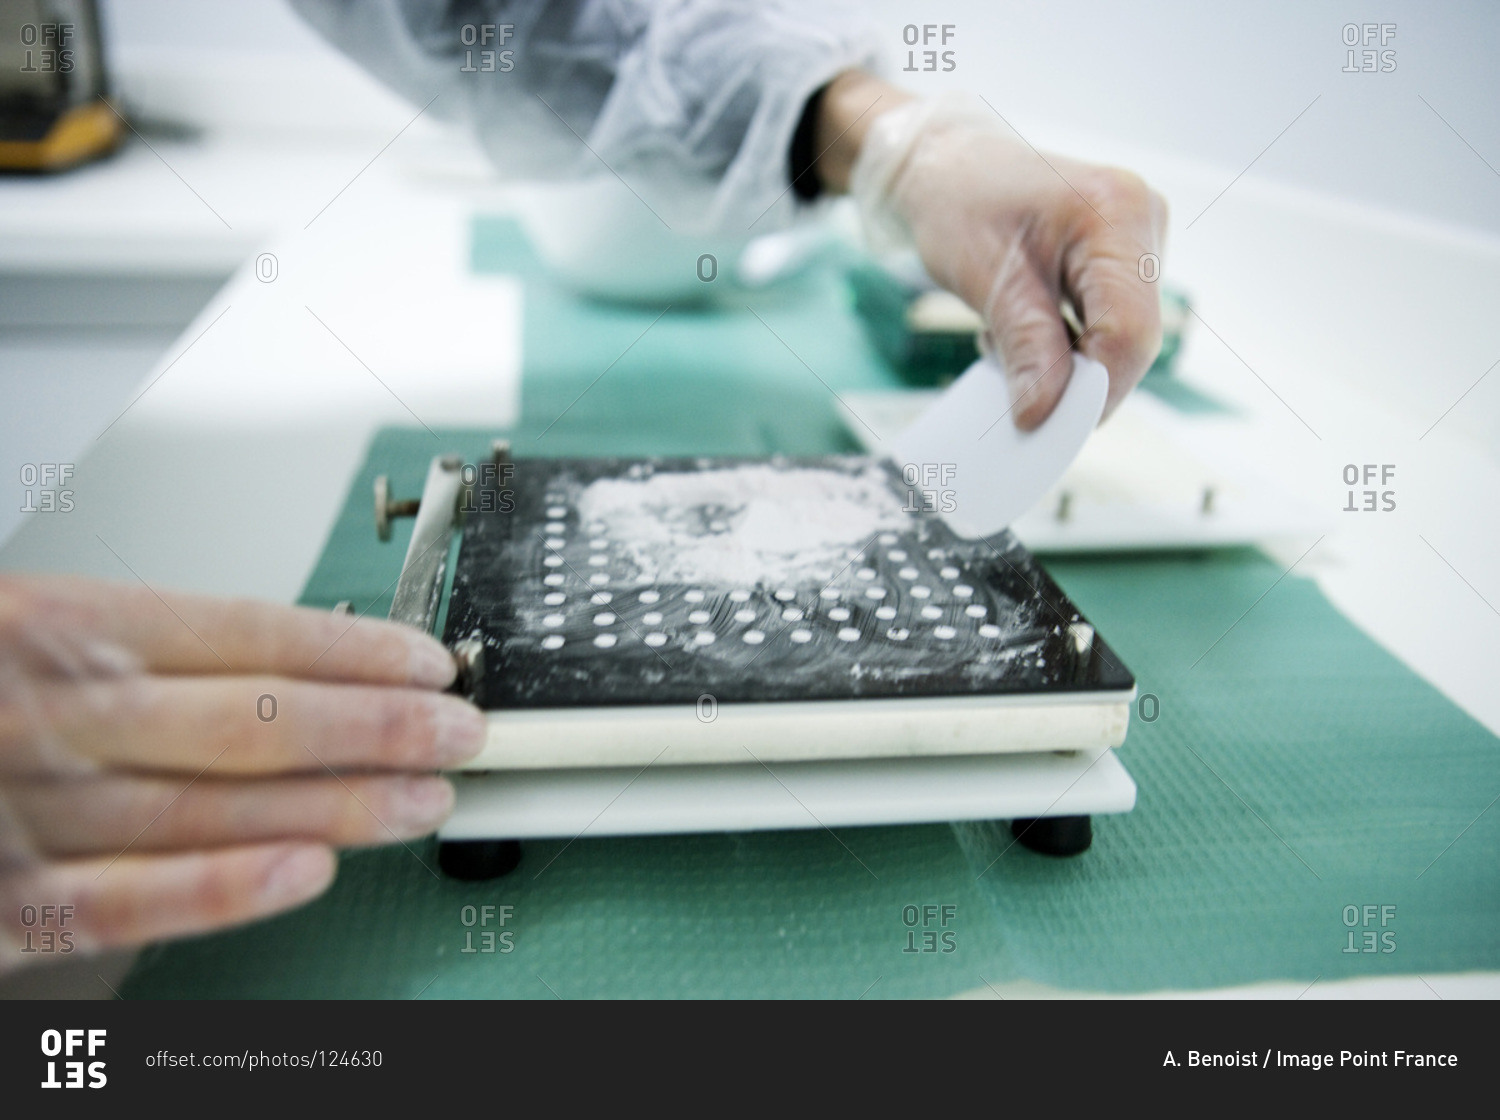 Laboratory technician preparing medical drugs using a measuring devise